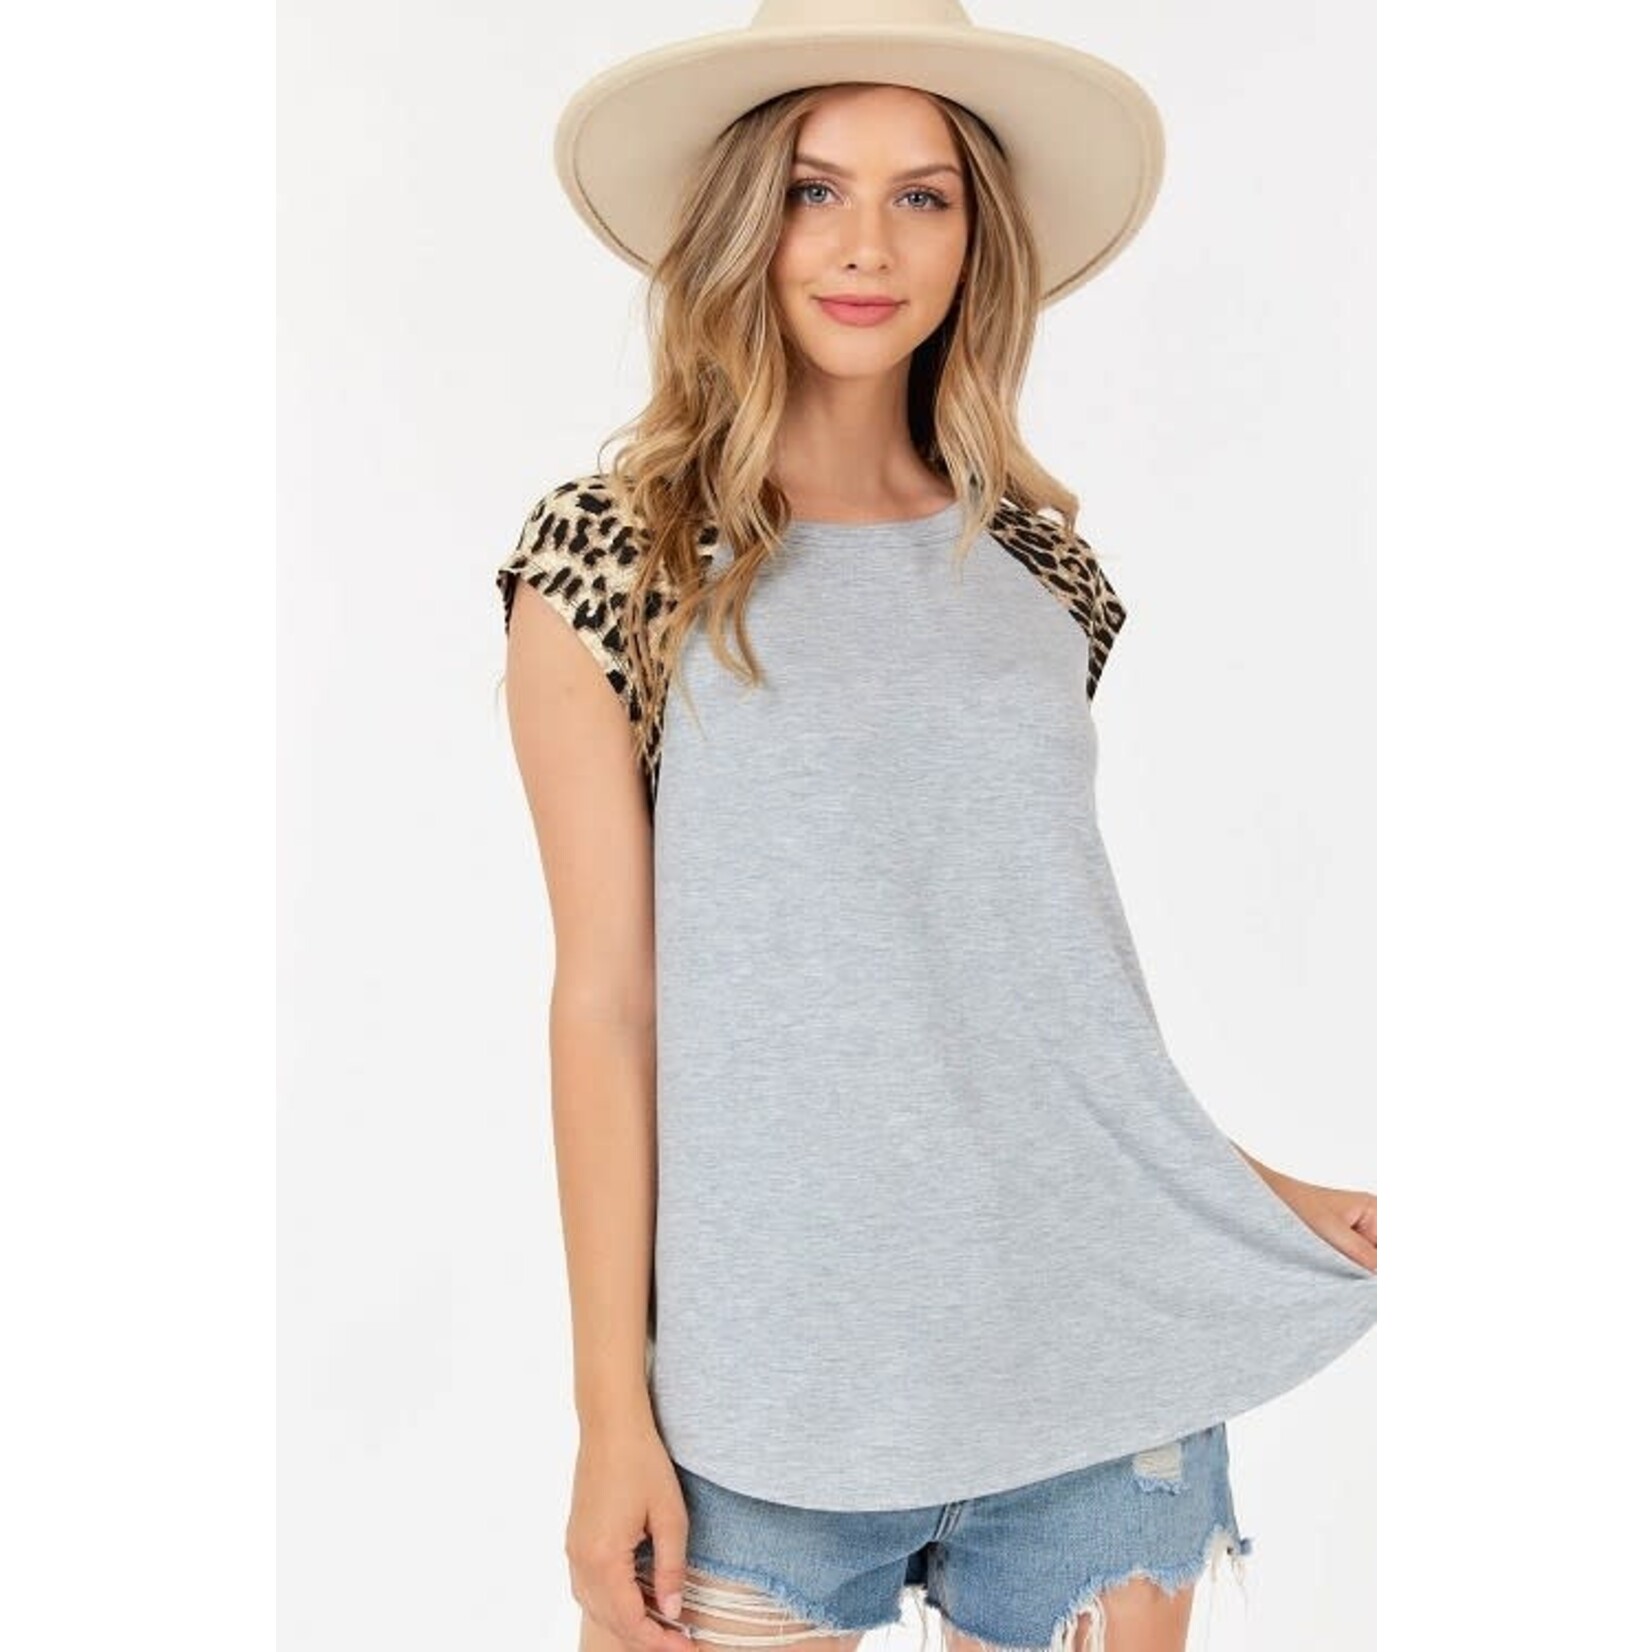 Shop Basic USA Short Sleeve Round Neck Top with Animal Print